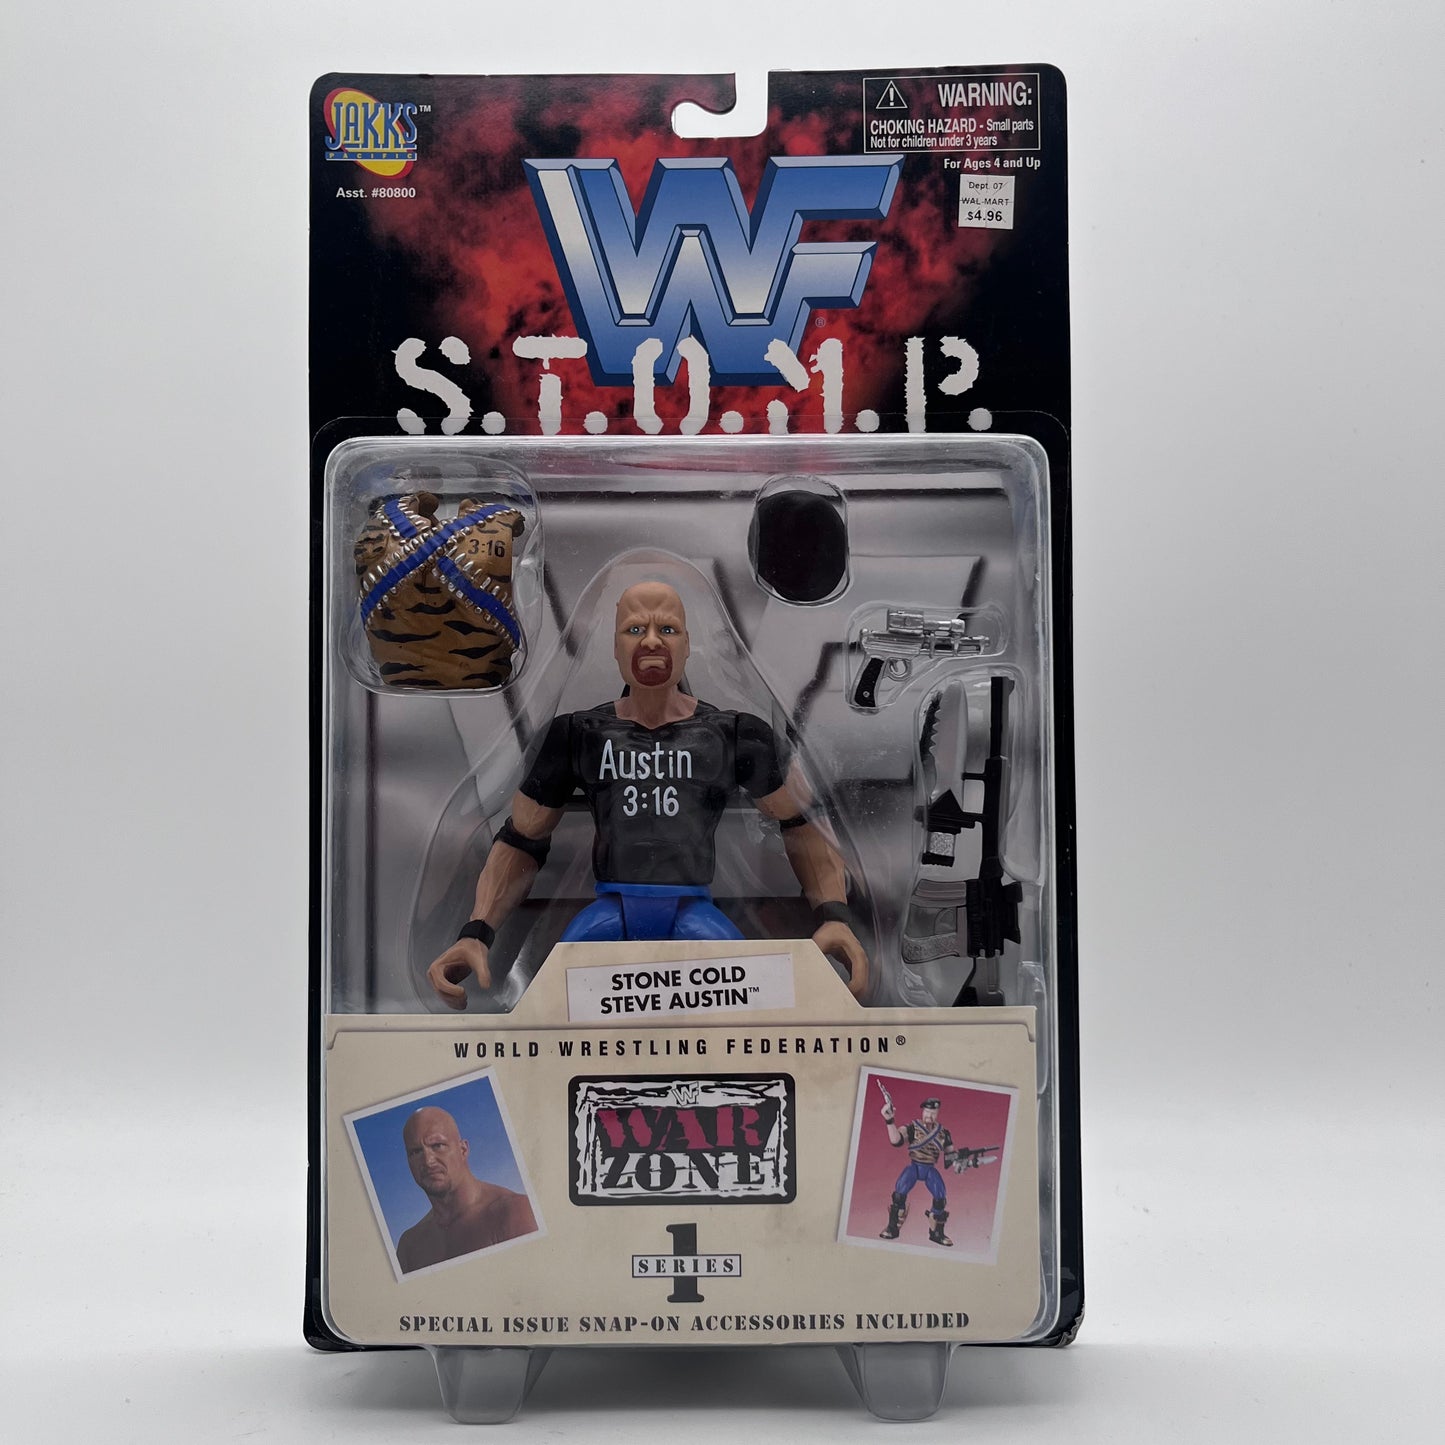 WWF 1997 Stomp War Zone 1 Stone Cold Steve Austin